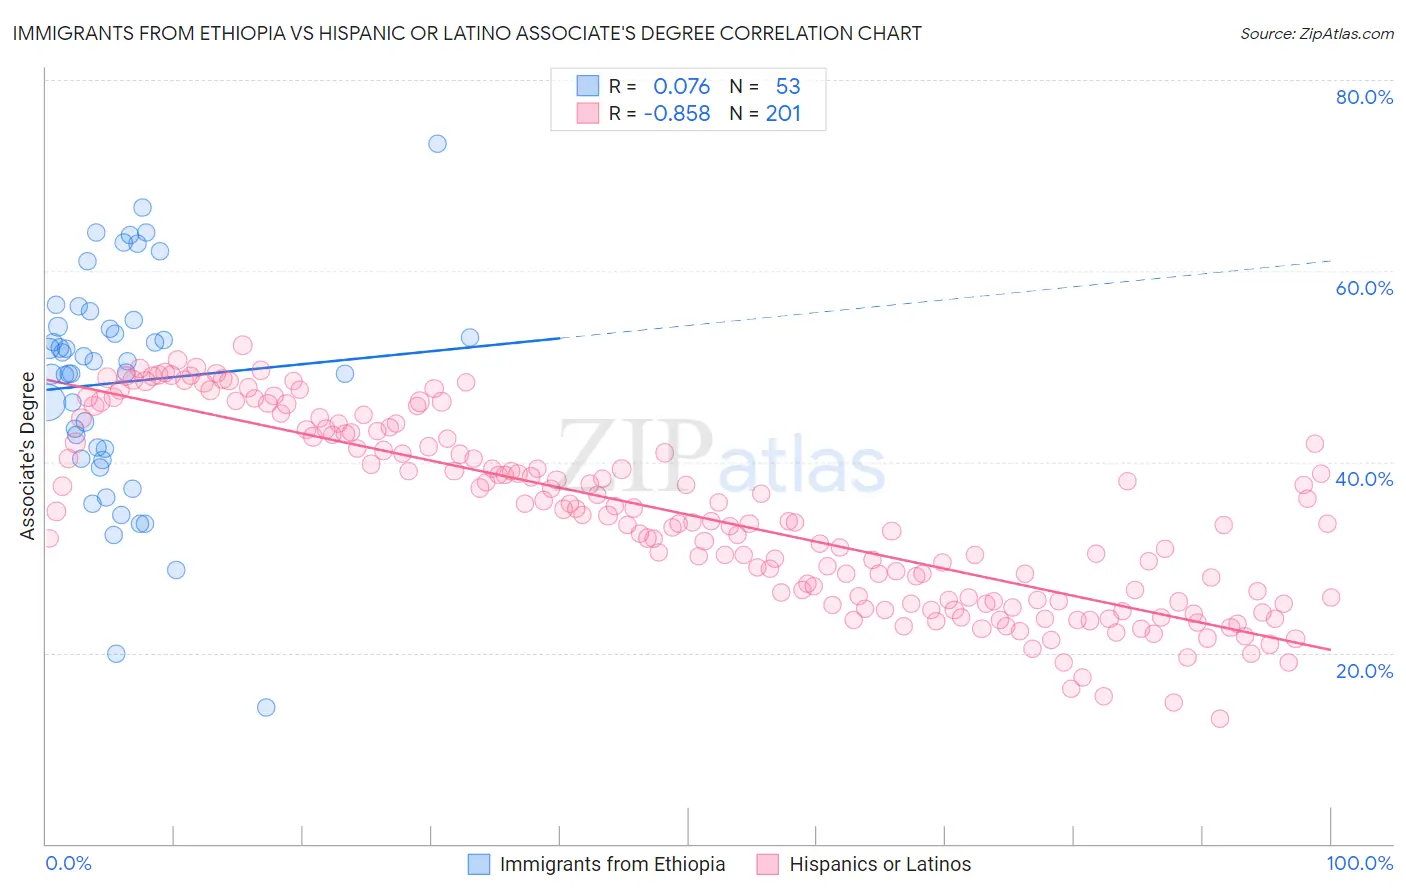 Immigrants from Ethiopia vs Hispanic or Latino Associate's Degree